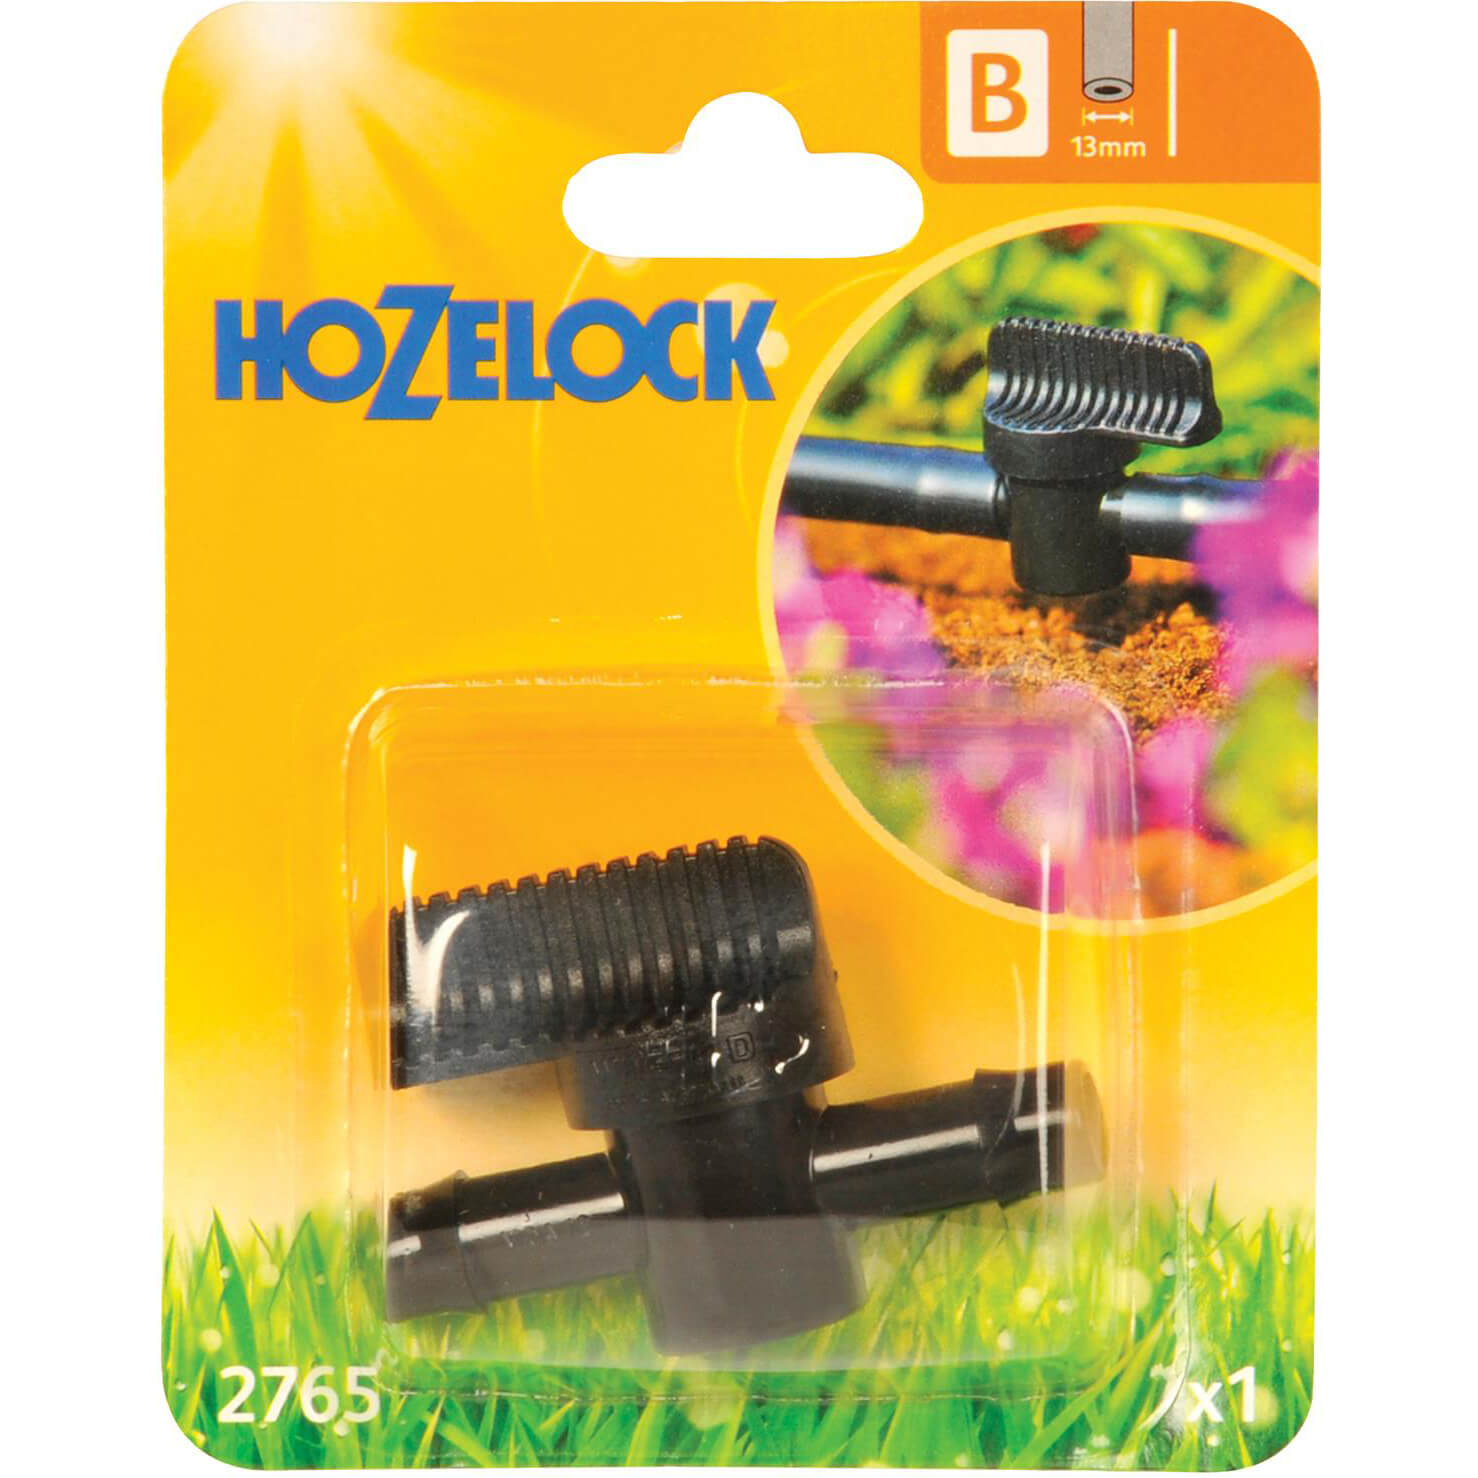 Hozelock Flow Control Valve 13mm Contains 1